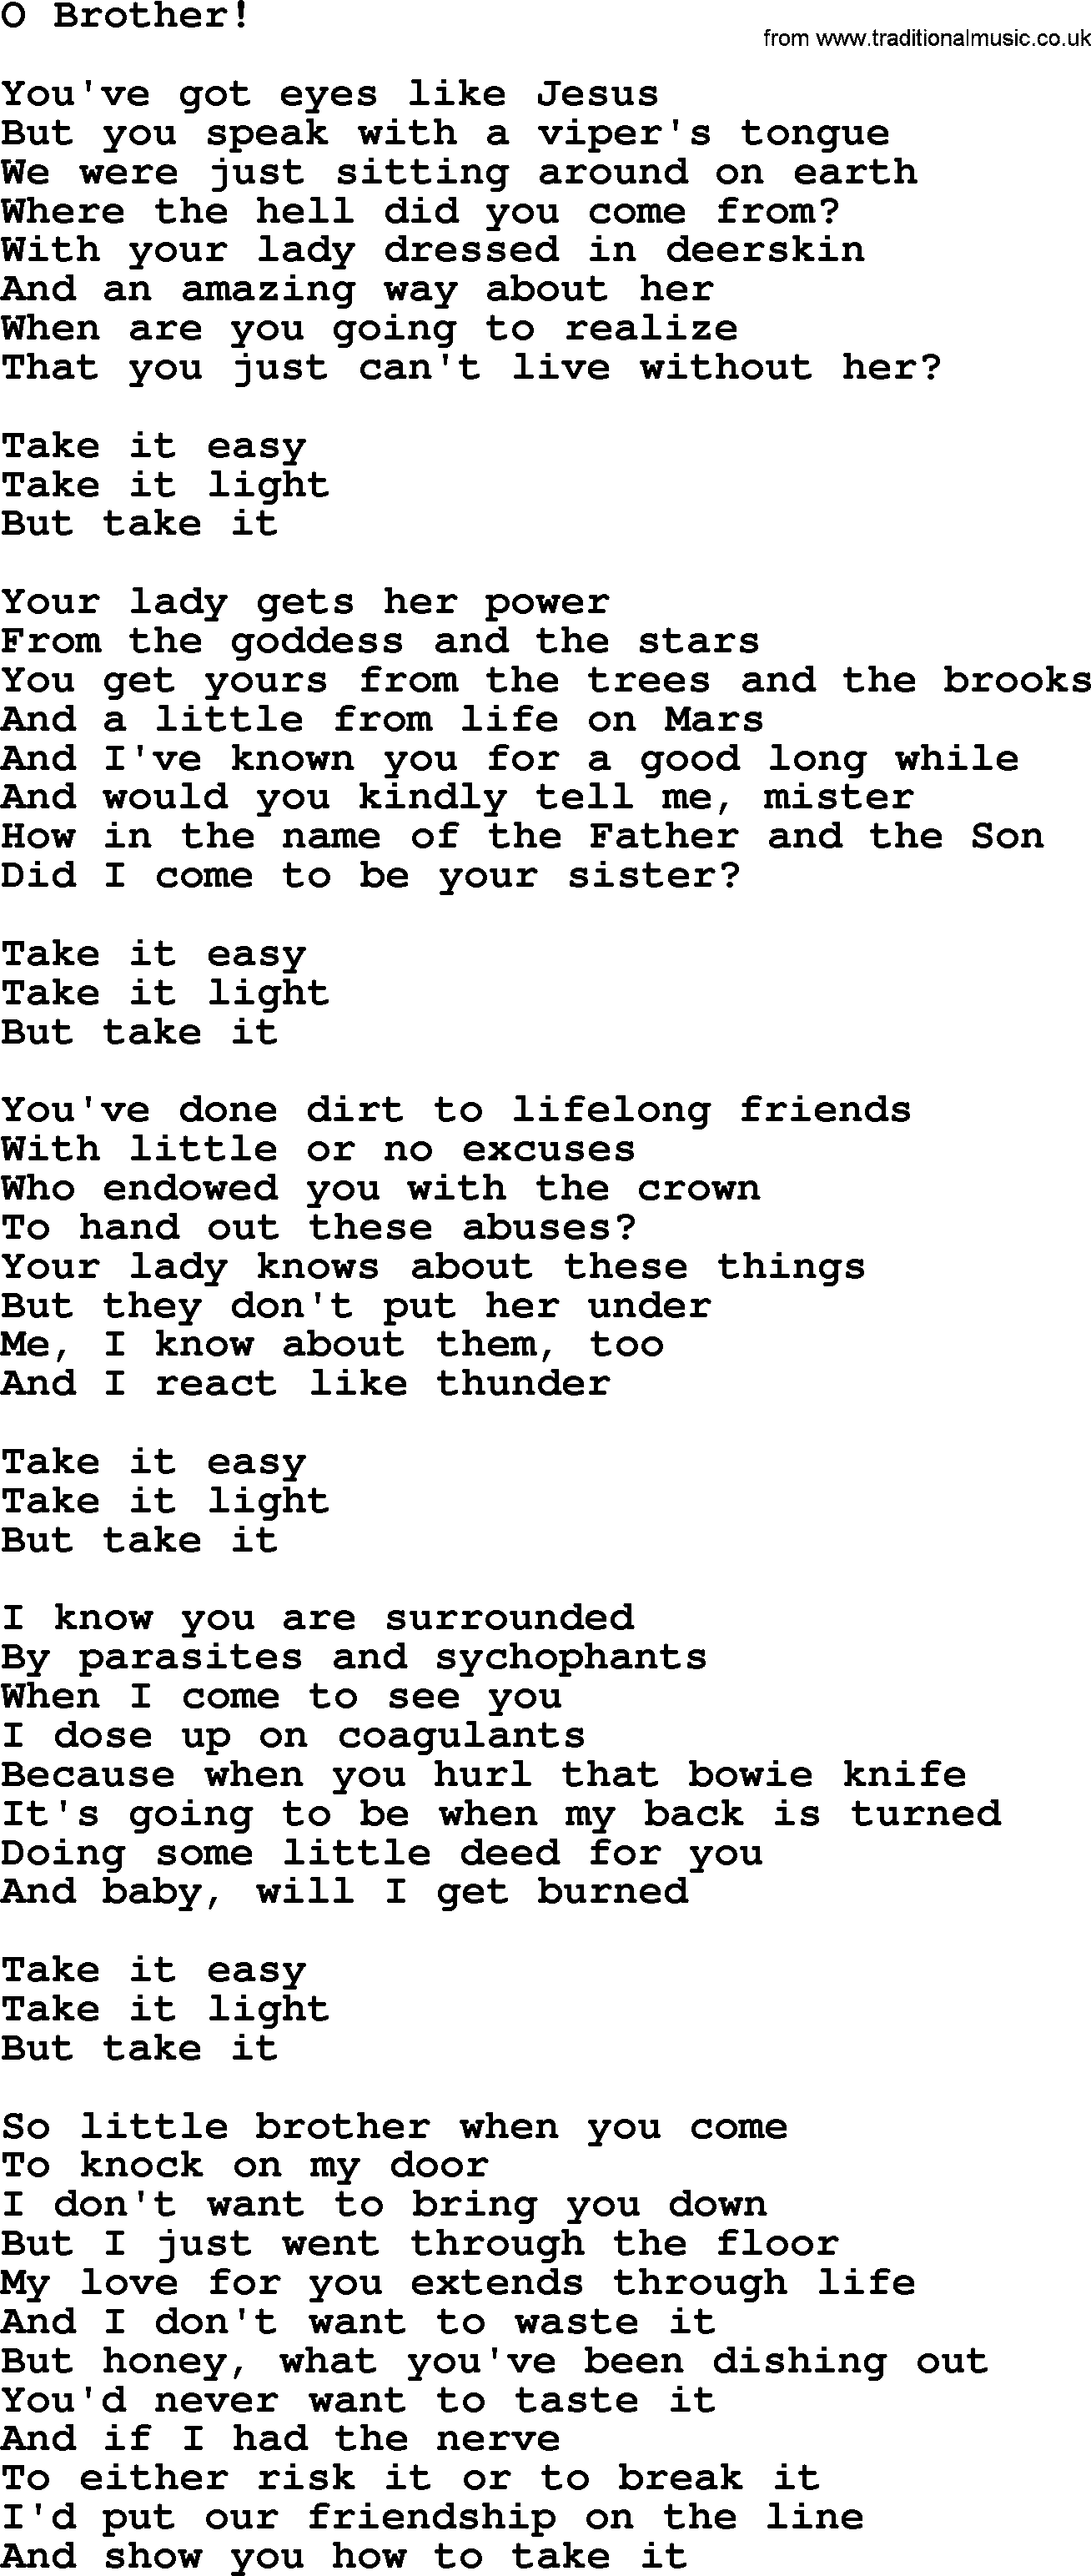 Joan Baez song O Brother!, lyrics